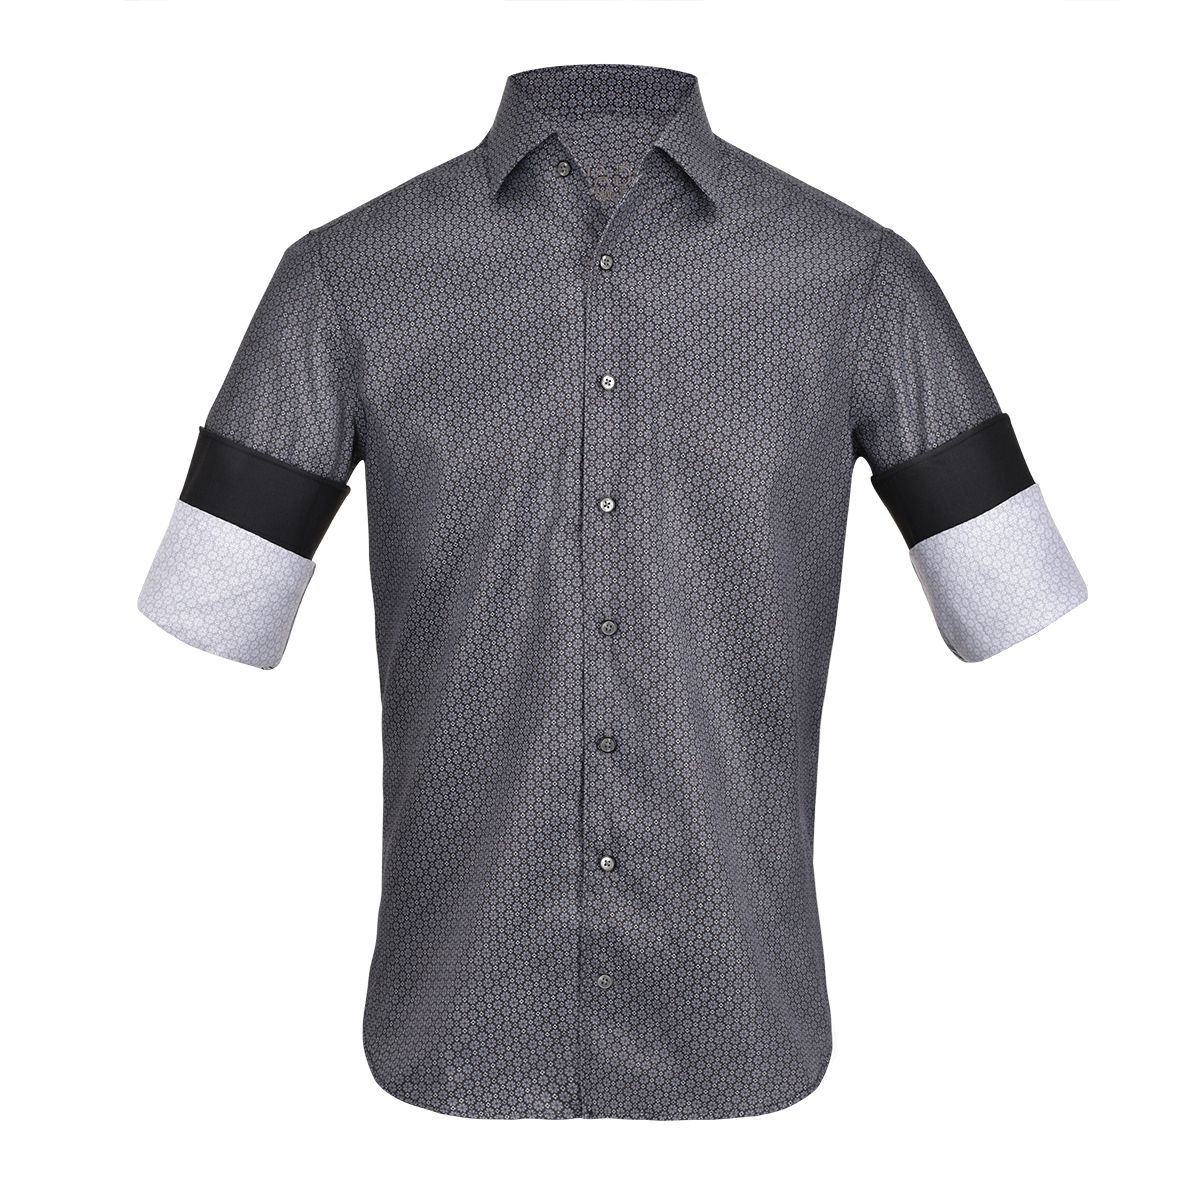 CMW556R - Cuadra black casual fashion cotton shirt for men-Kuet.us